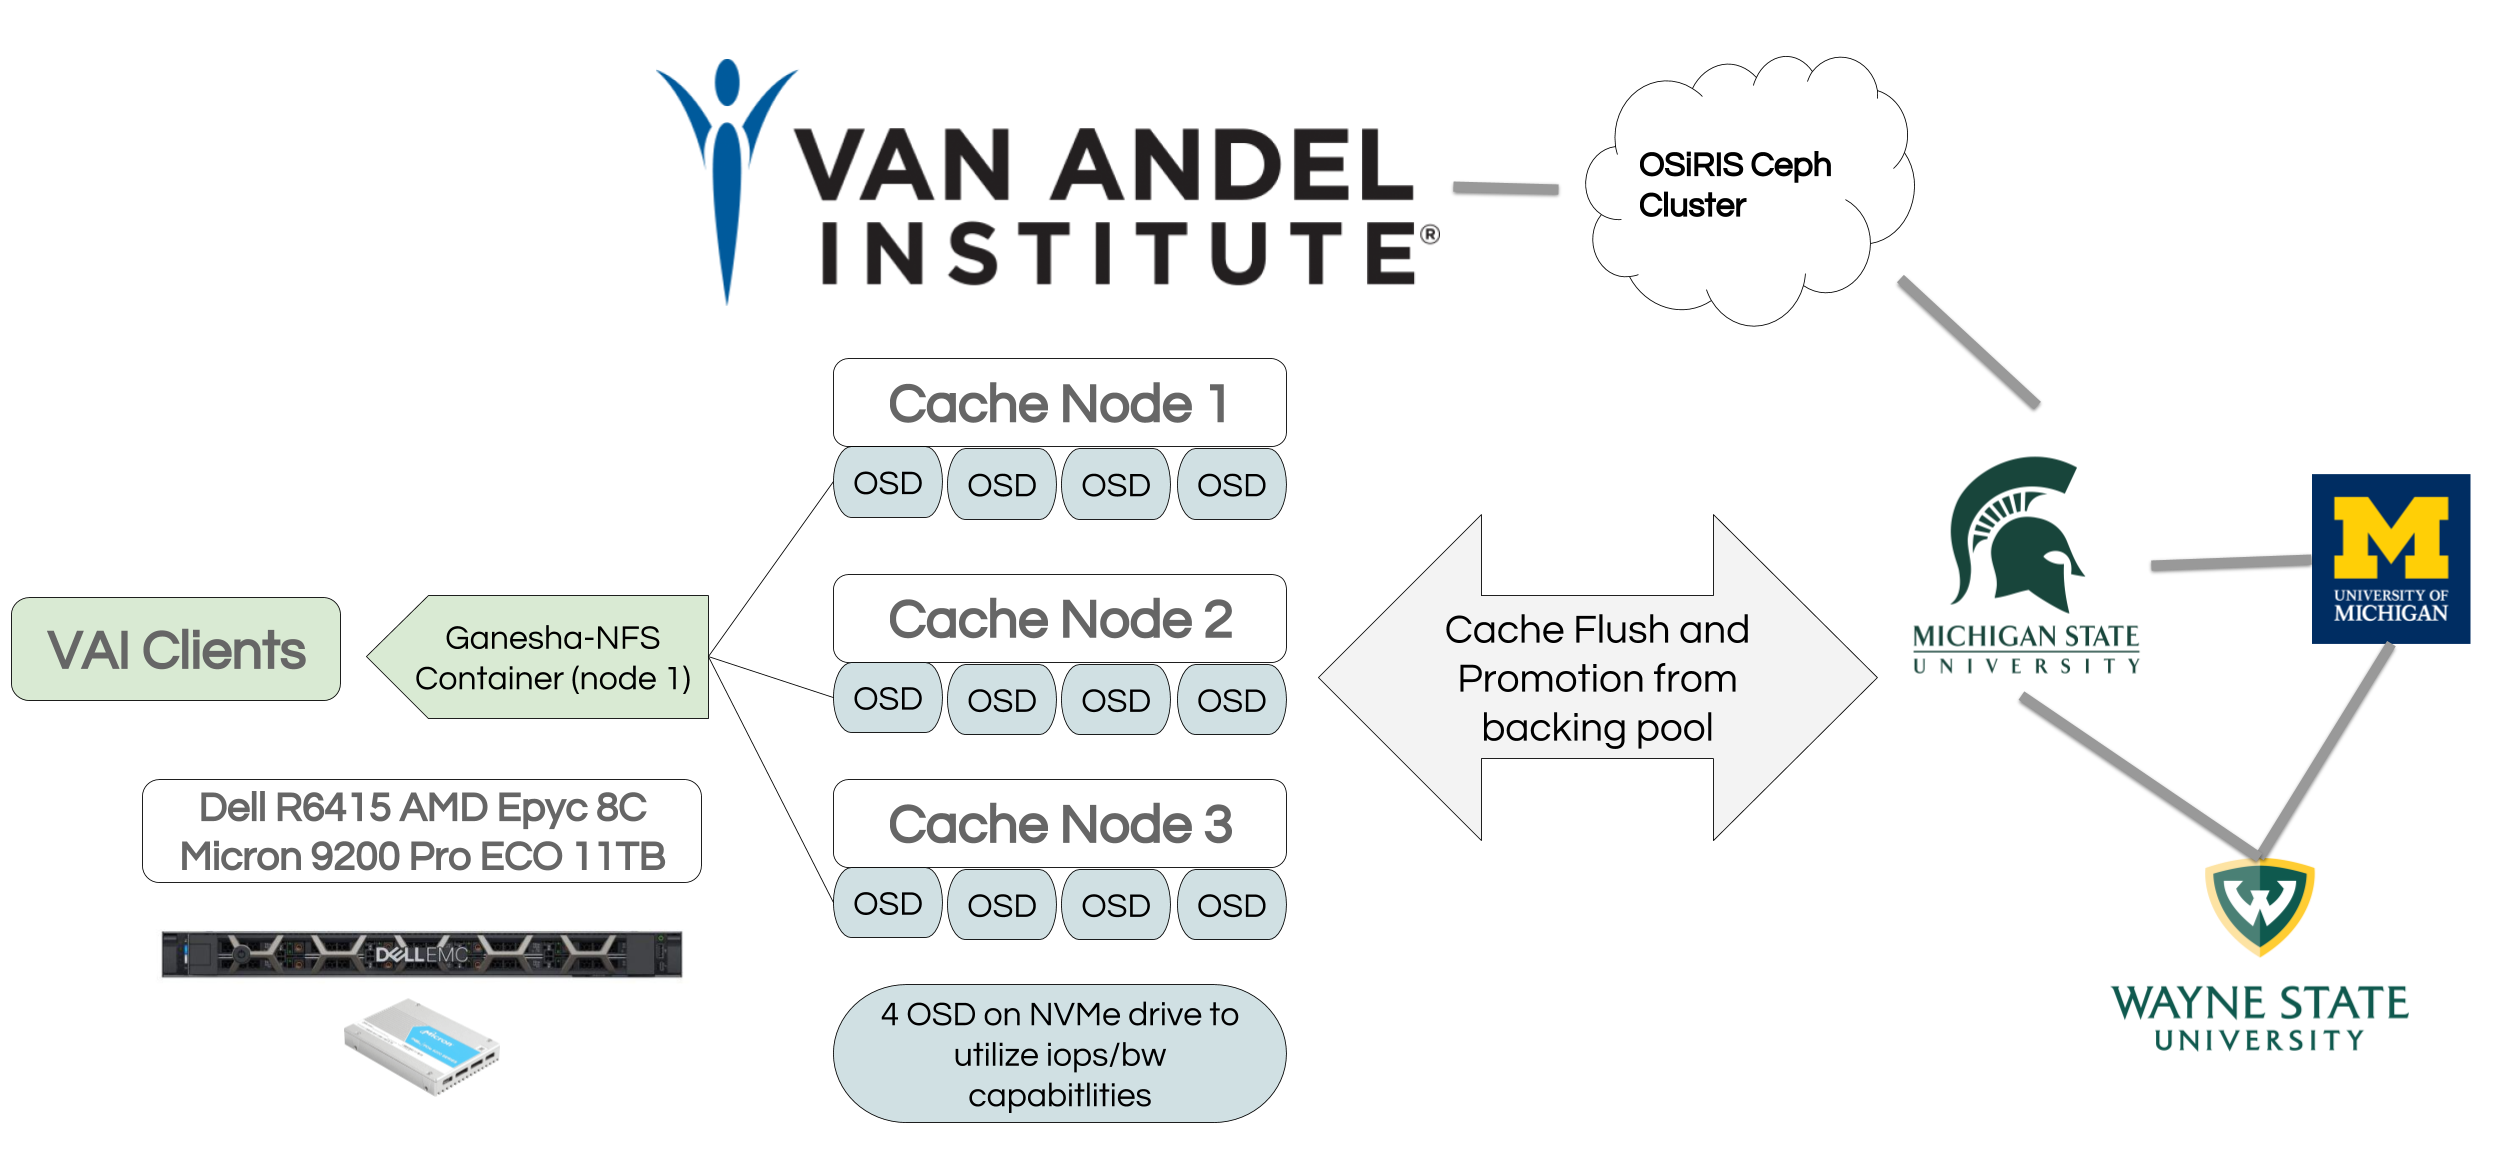 Van Andel Institute site overview diagram